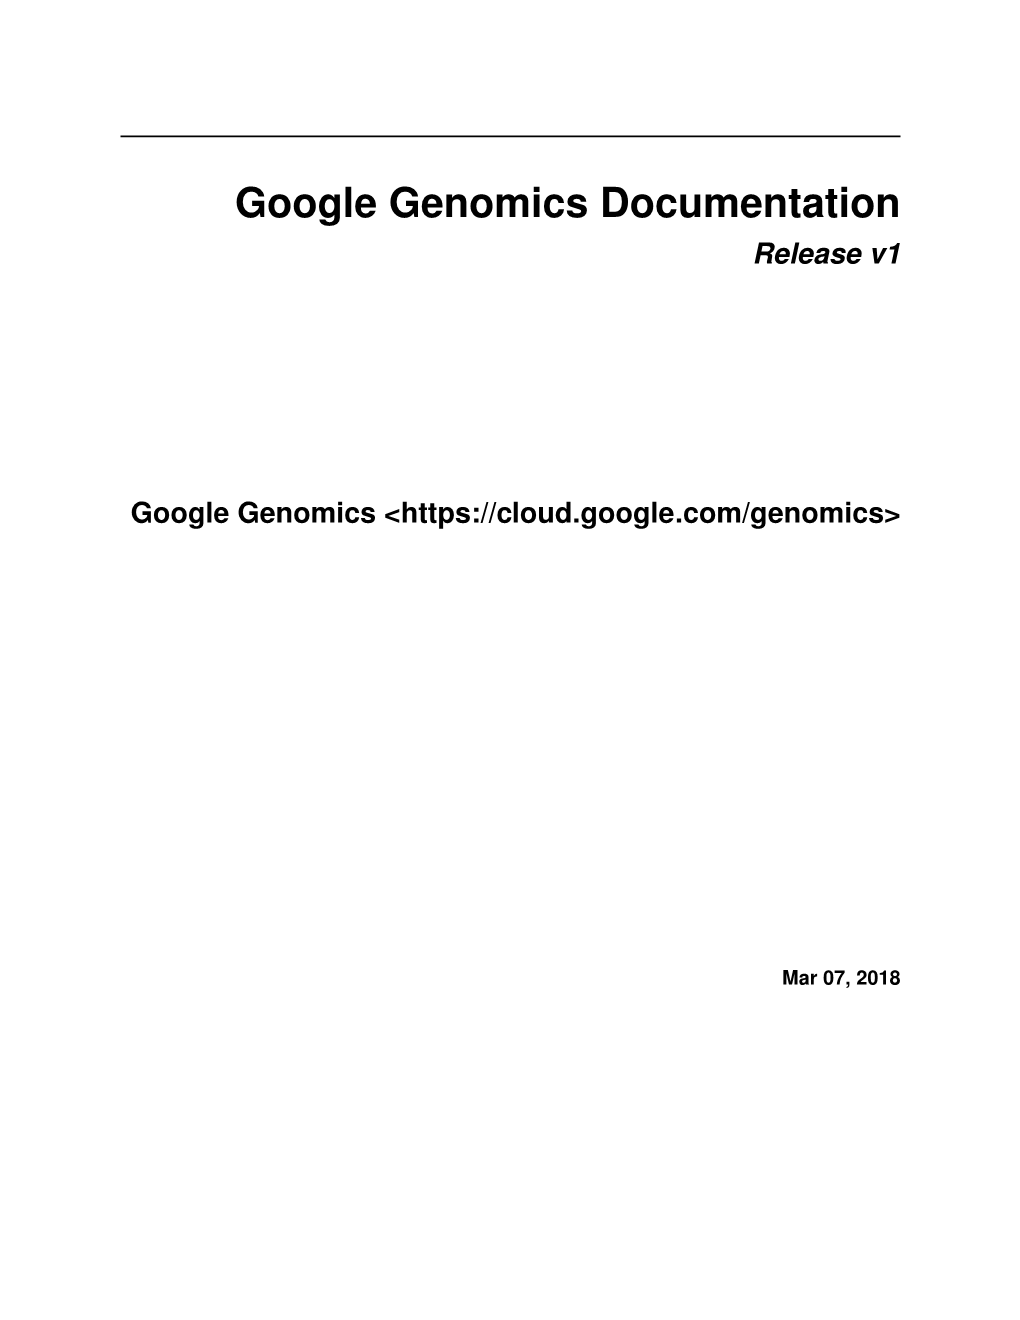 Google Genomics Documentation Release V1